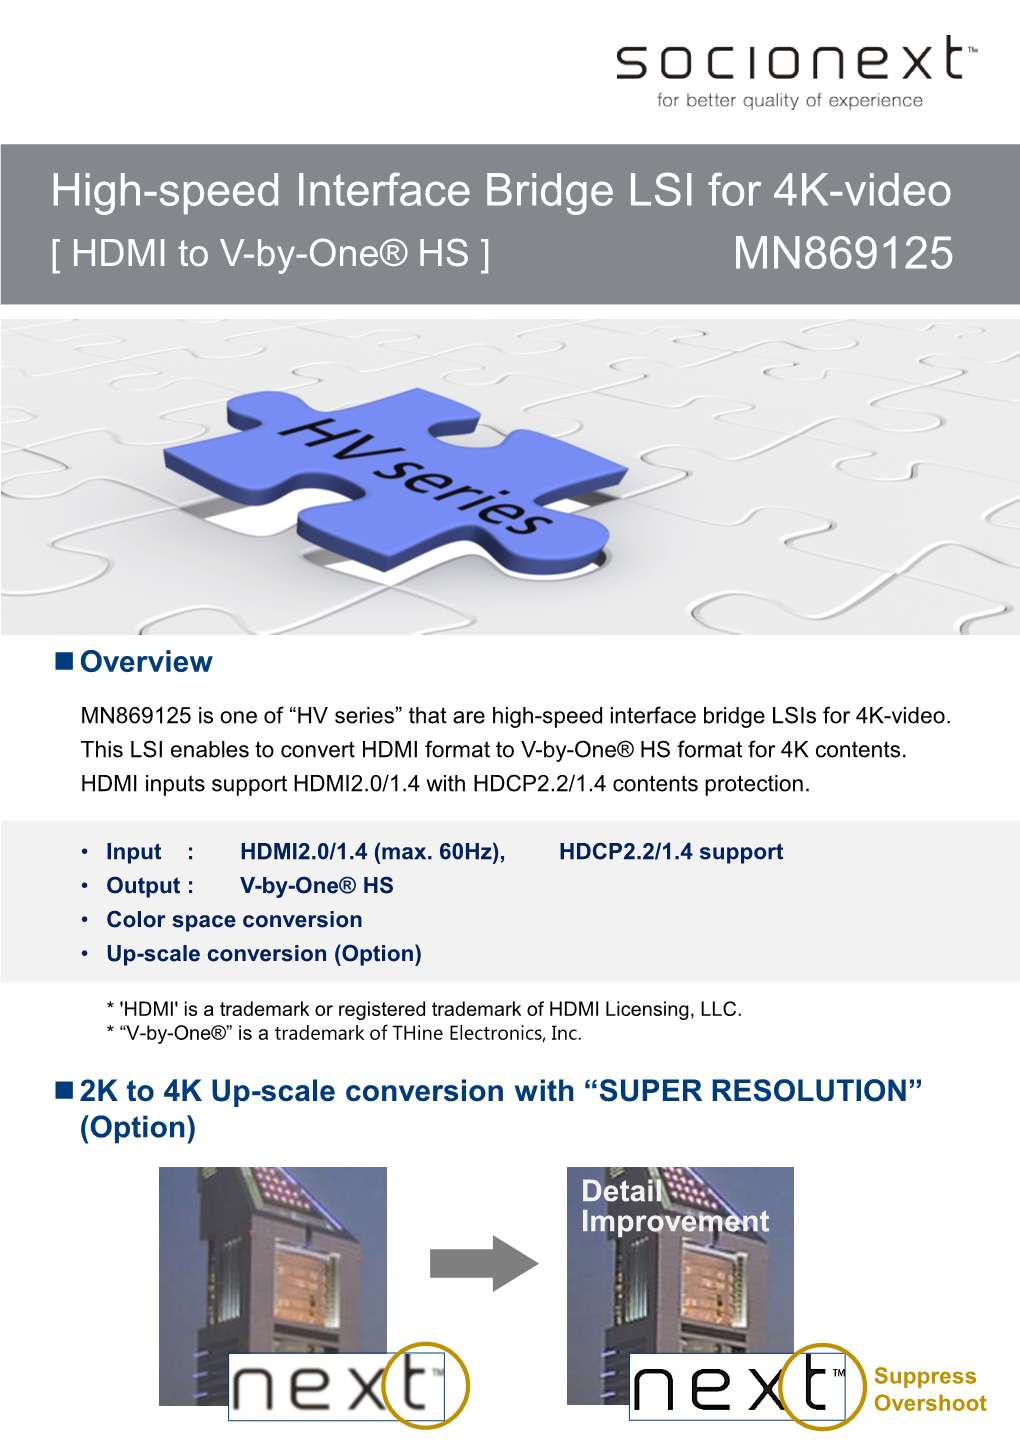 High-Speed Interface Bridge LSI for 4K-Video MN869125